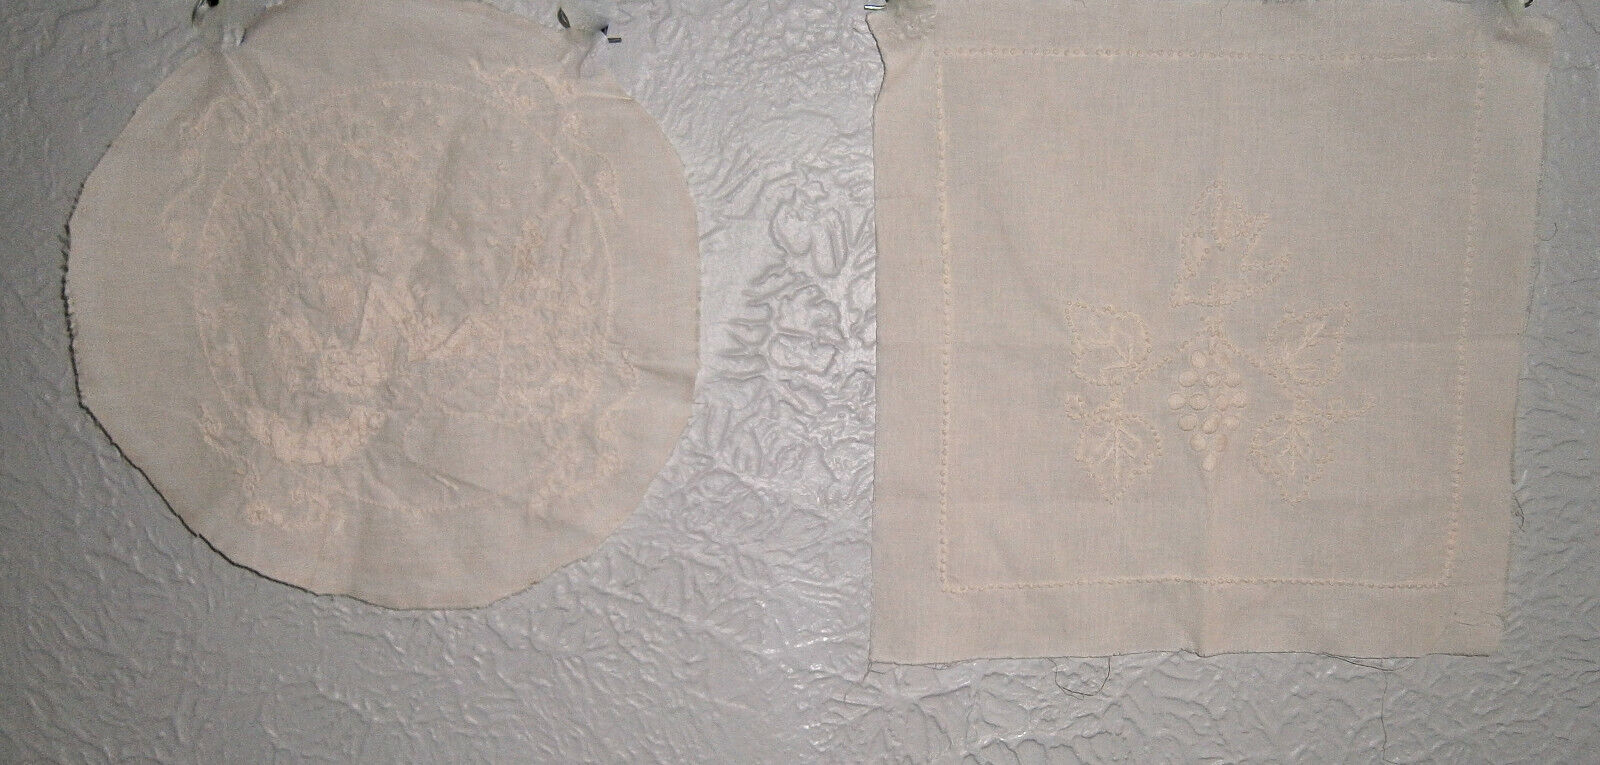 2 Ecru Handmade Embroidered Pillow Covers Square Grape  Round C